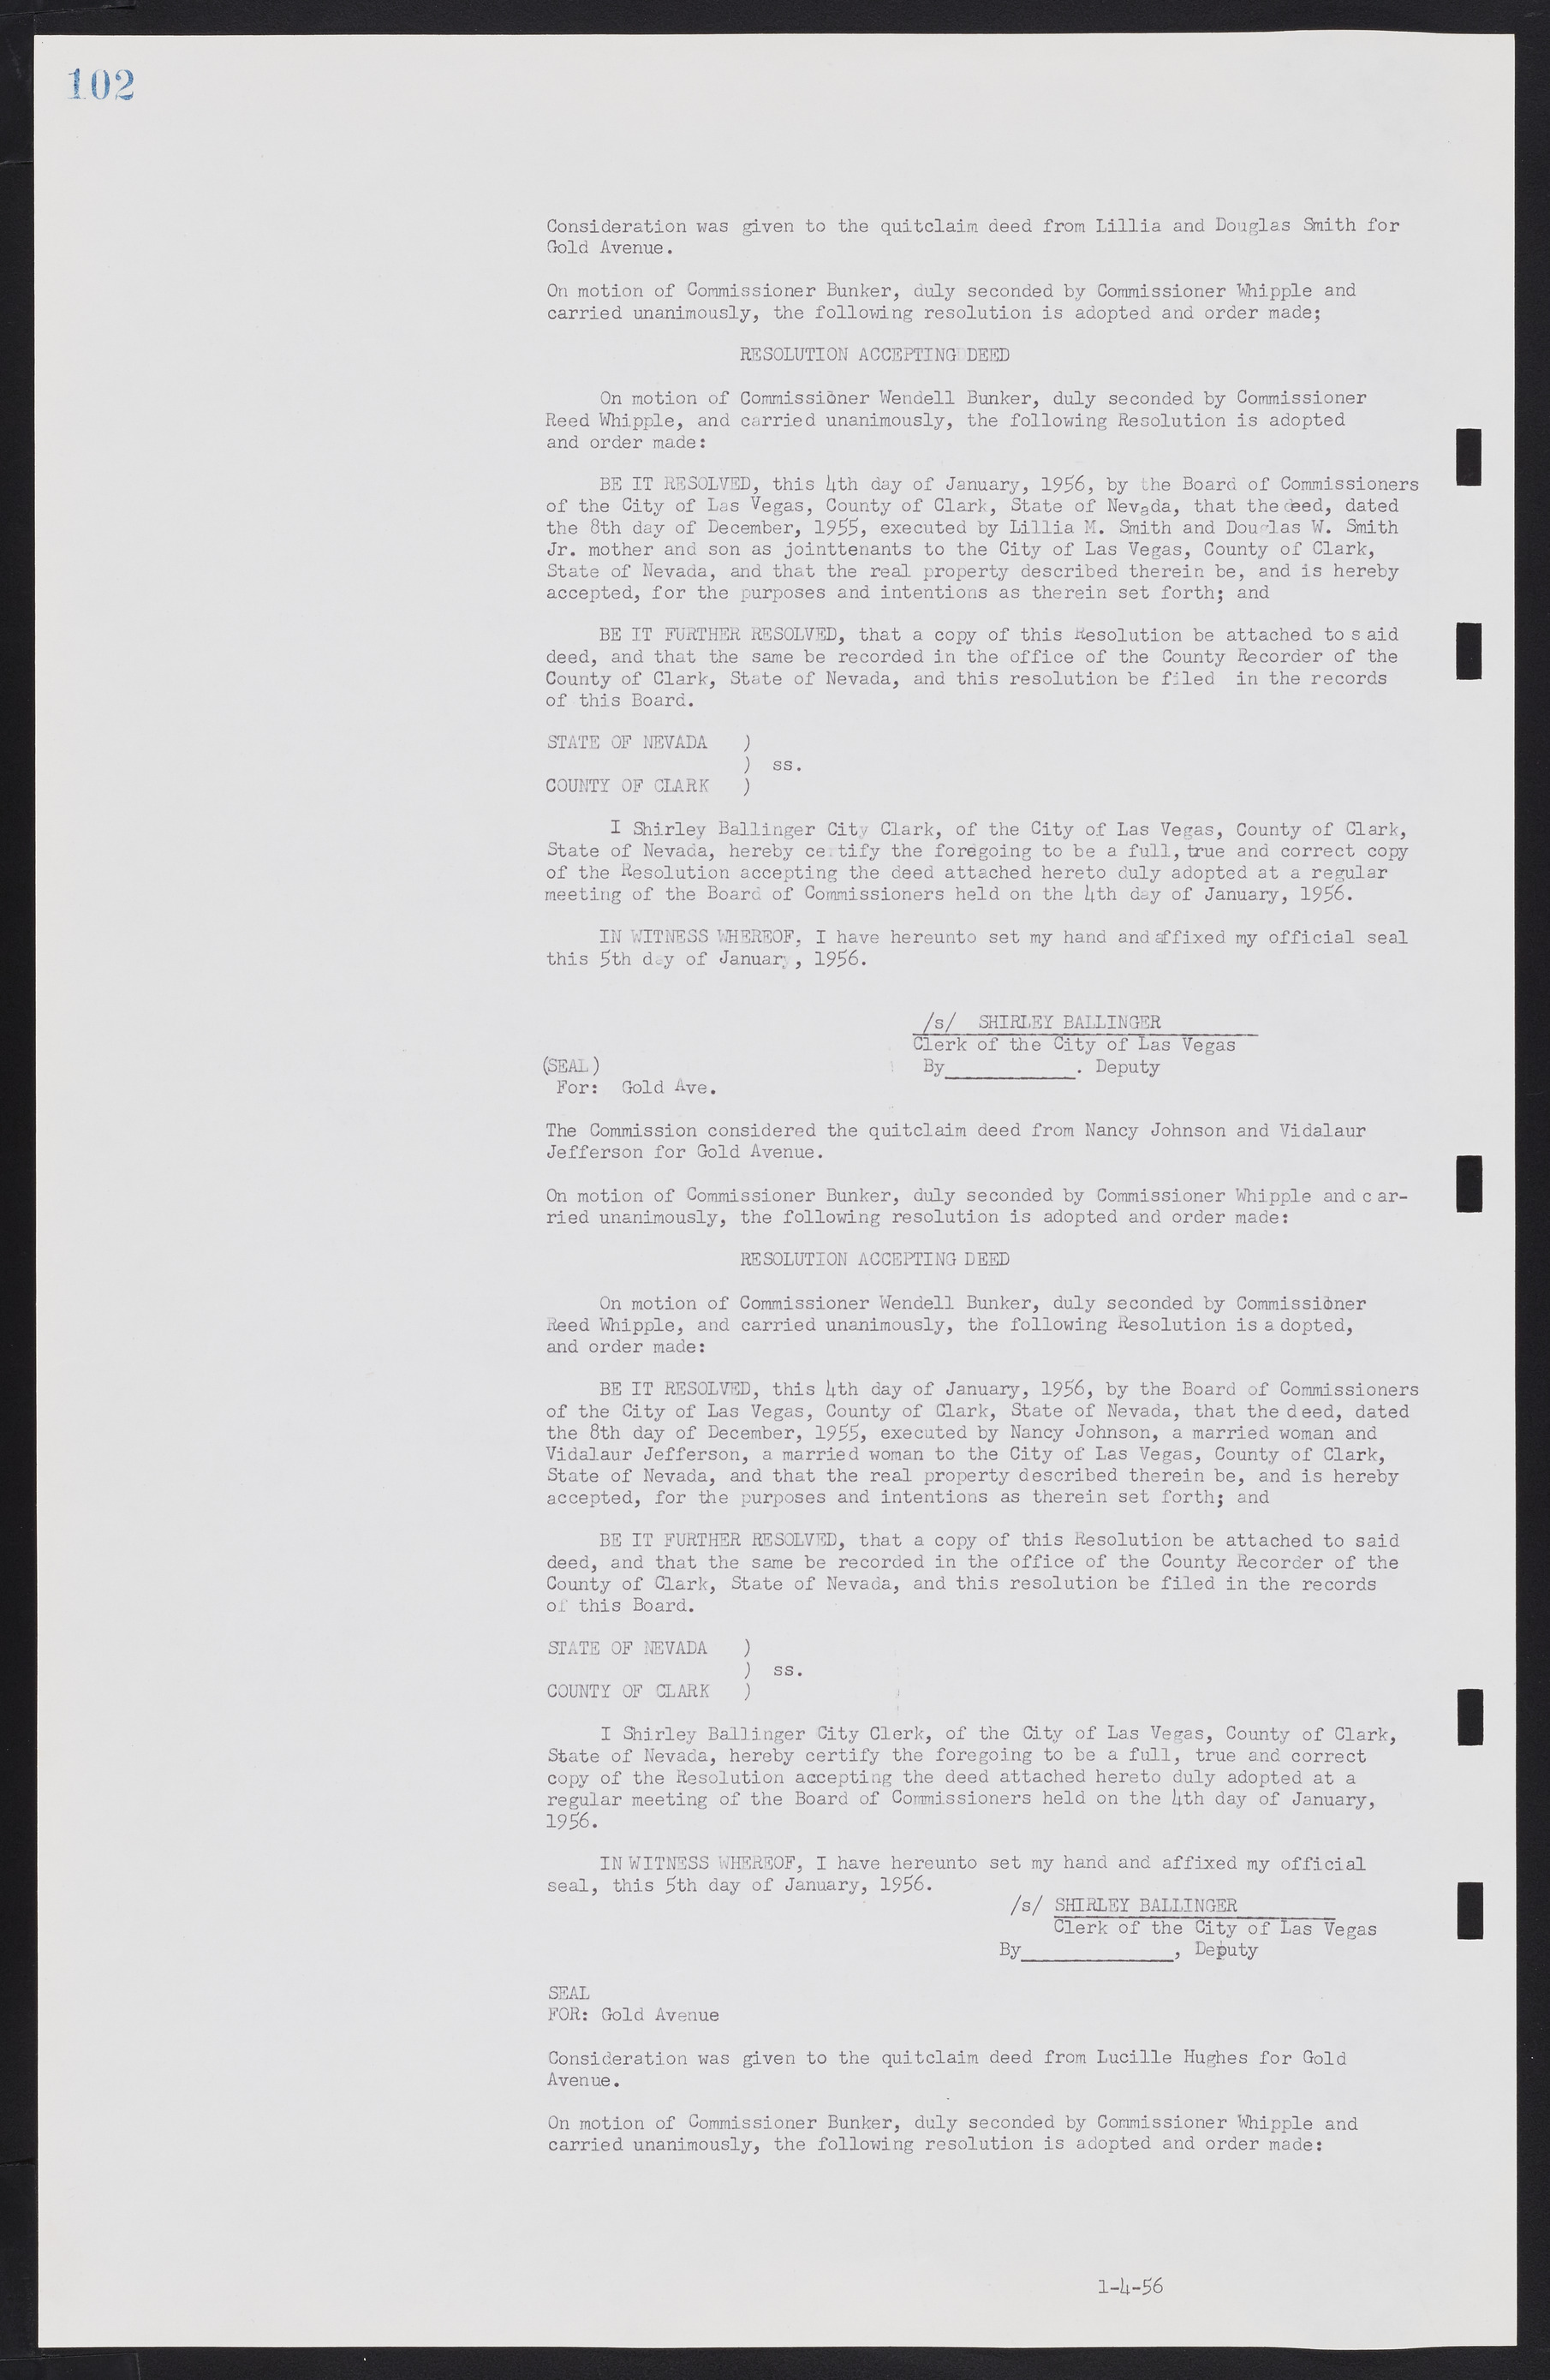 Las Vegas City Commission Minutes, September 21, 1955 to November 20, 1957, lvc000010-112